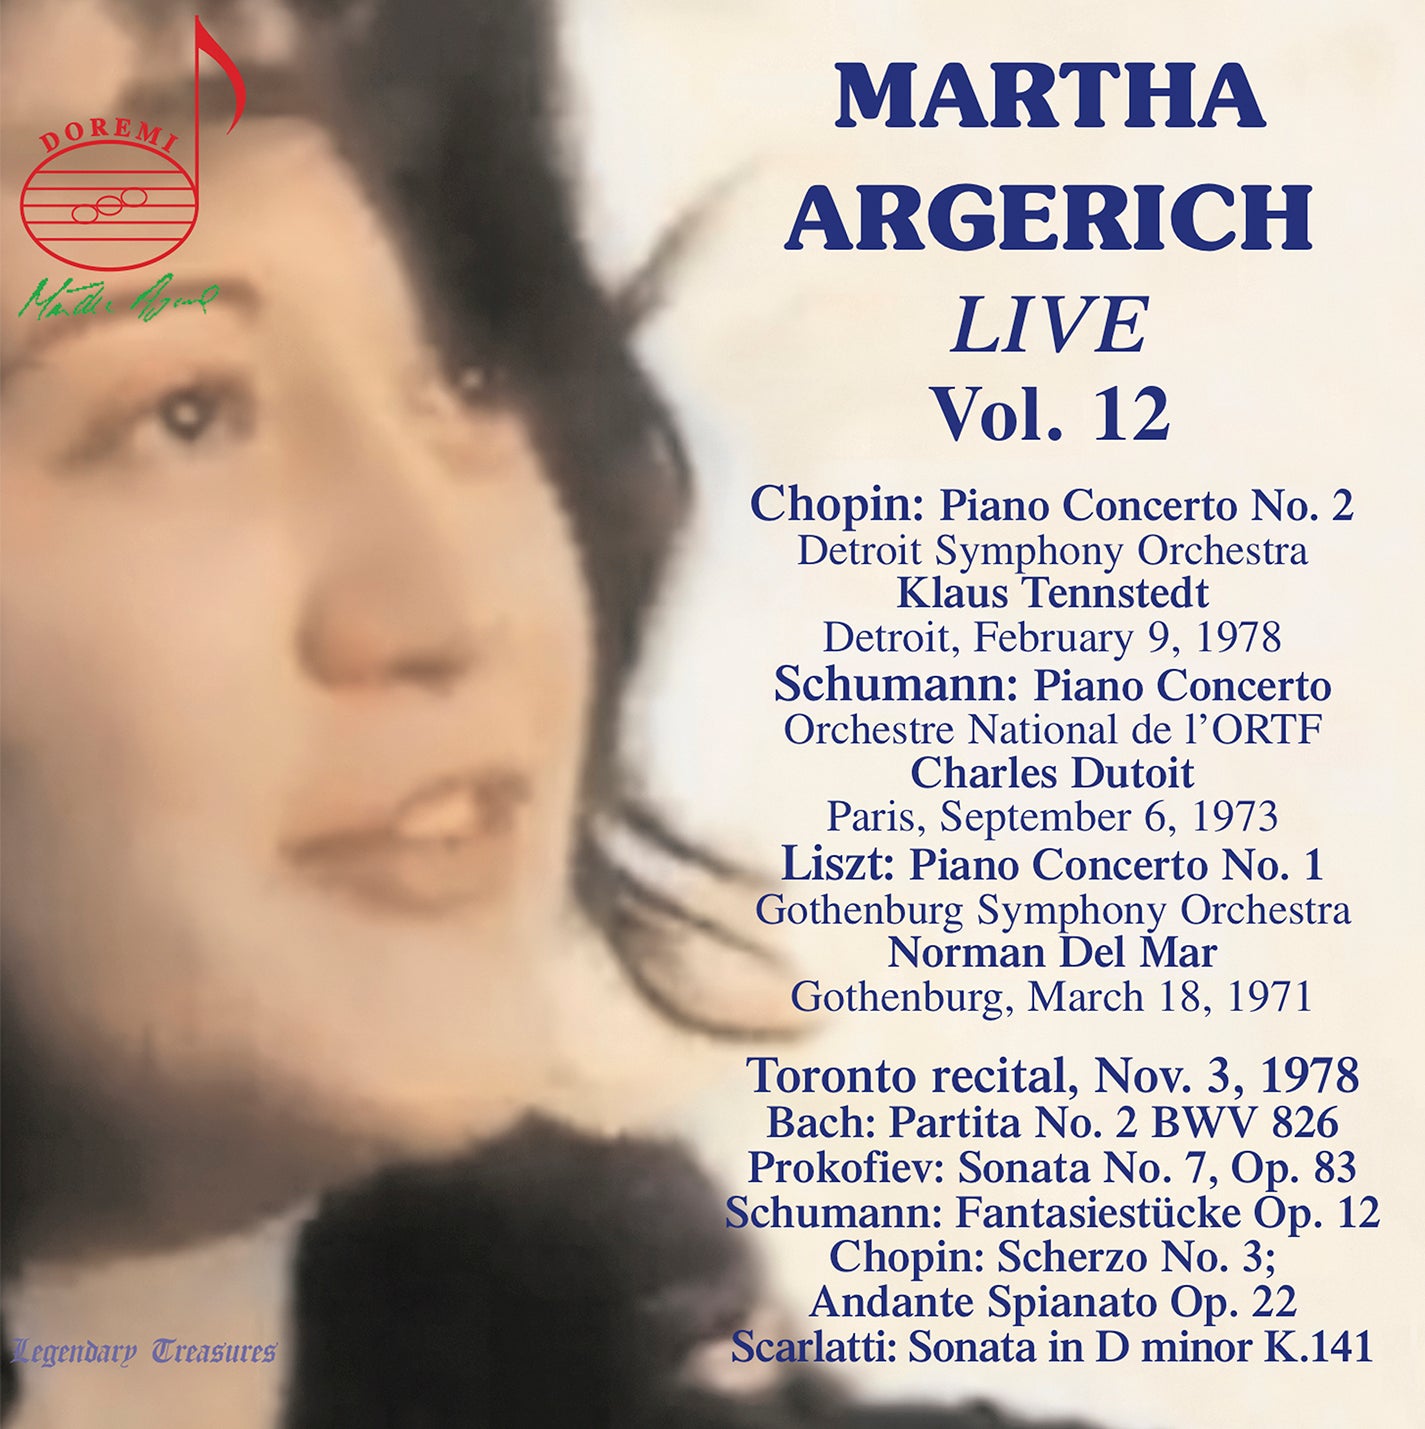 Martha Argerich Live, Vol. 12: Chopin, Schumann & Liszt Concerti & More